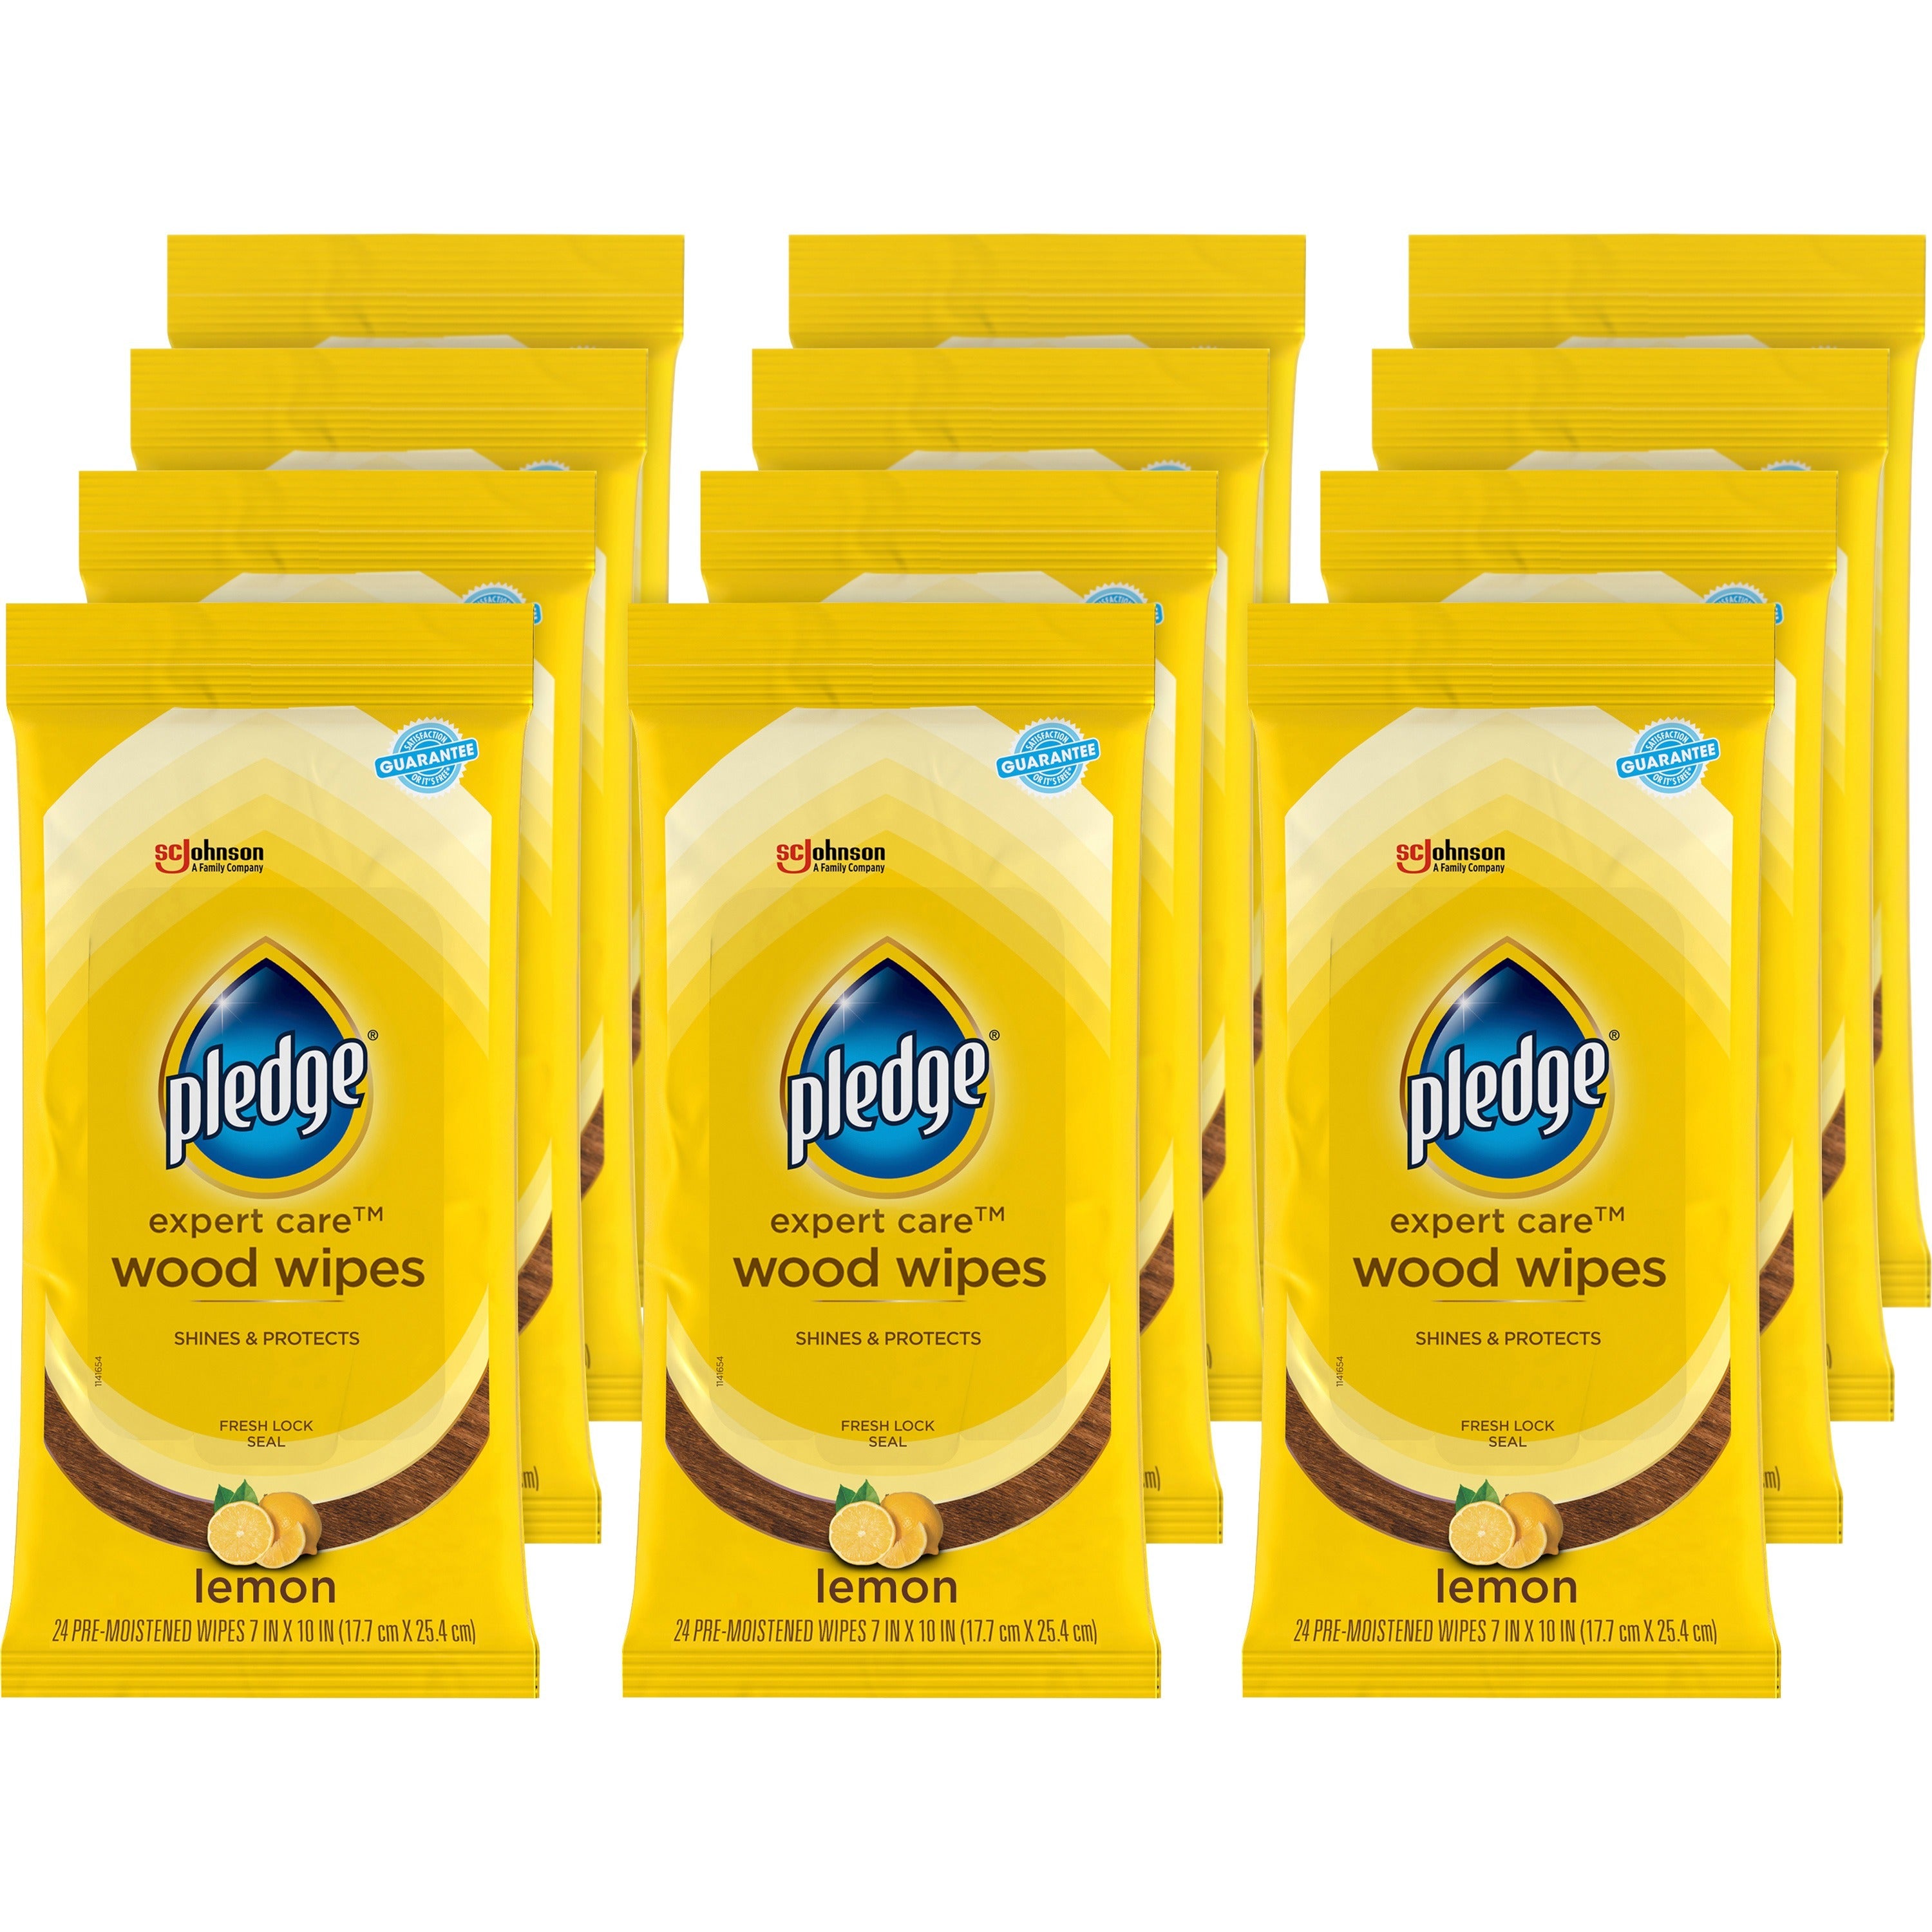 pledge-lemon-enhancing-polish-wipes-lemon-scent-10-length-x-7-width-24-pack-12-carton-pre-moistened-wax-free-yellow_sjn336297ct - 1